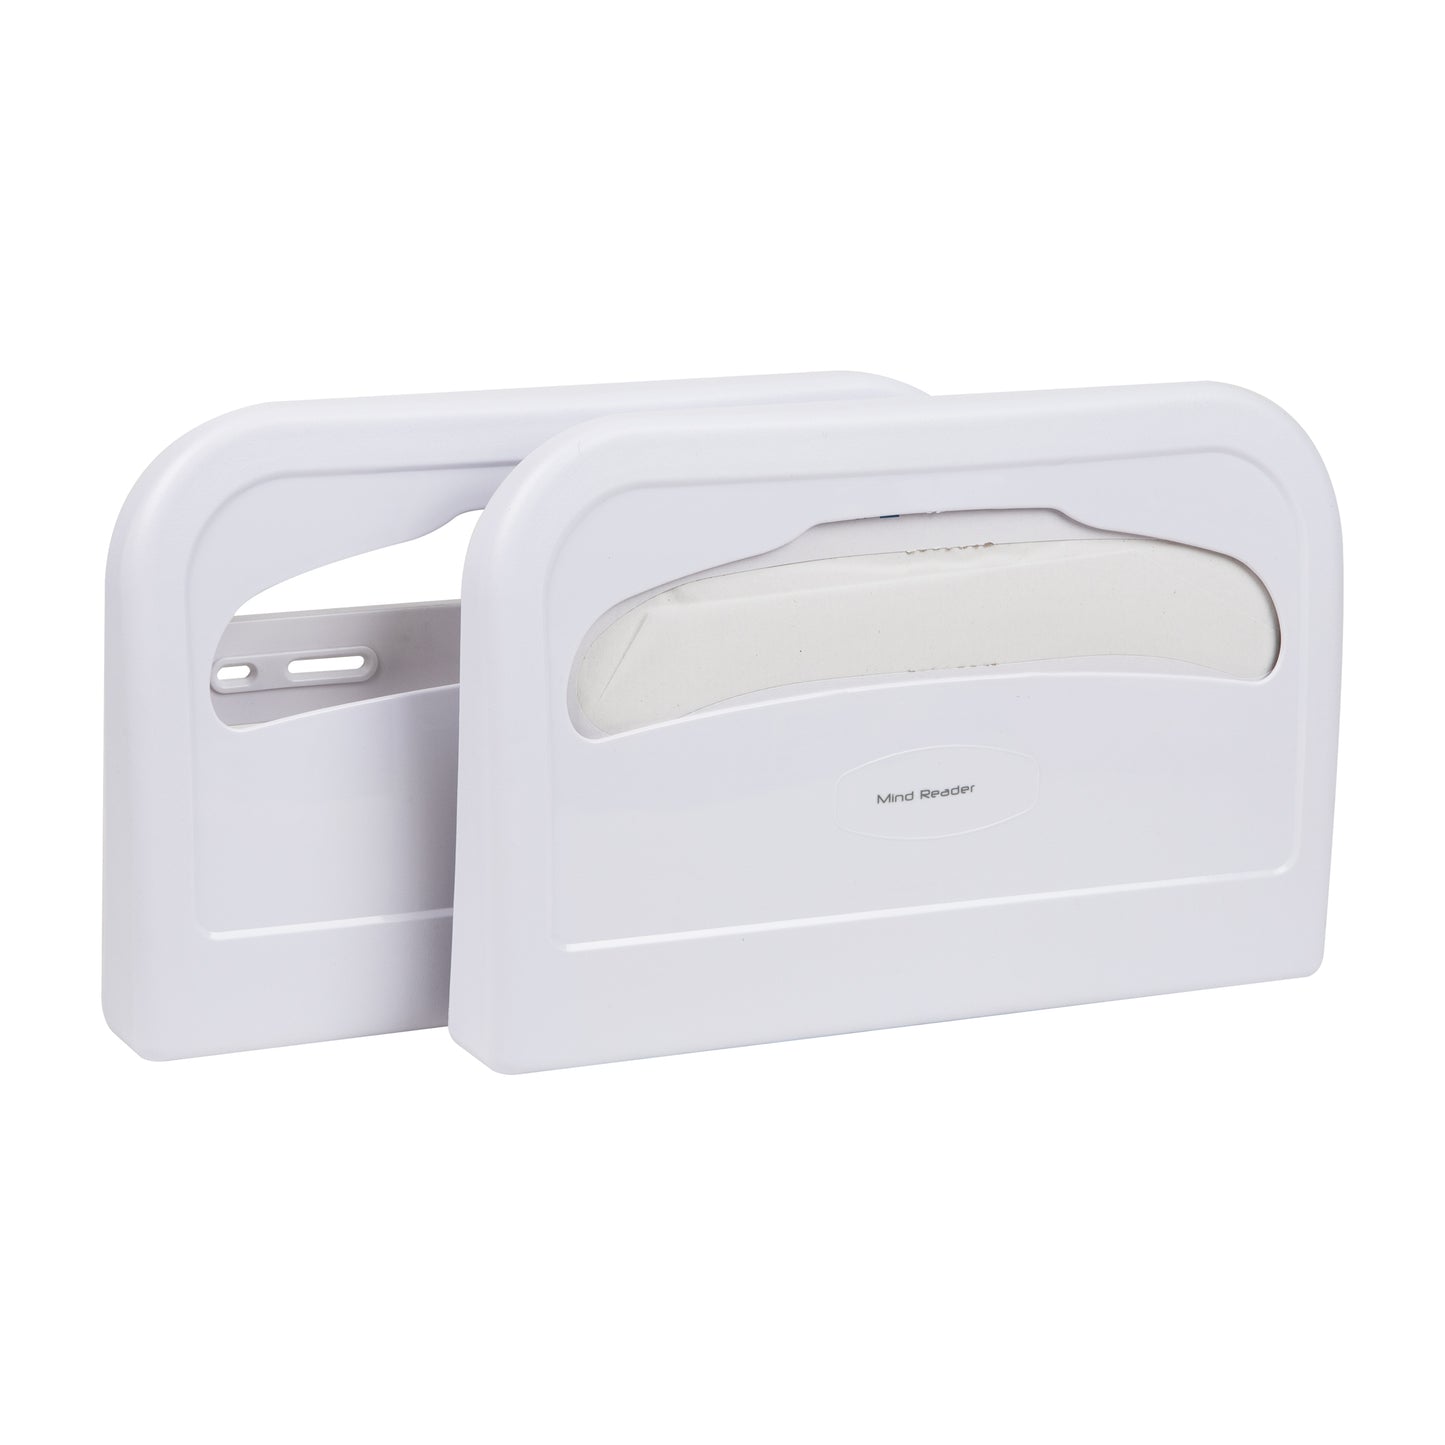 Mind Reader Toilet Seat Cover Dispenser, Set of 2, Wall Mount, Restroom, Bathroom, Plastic, 16.5"L x 11.25"W x 2"H, White